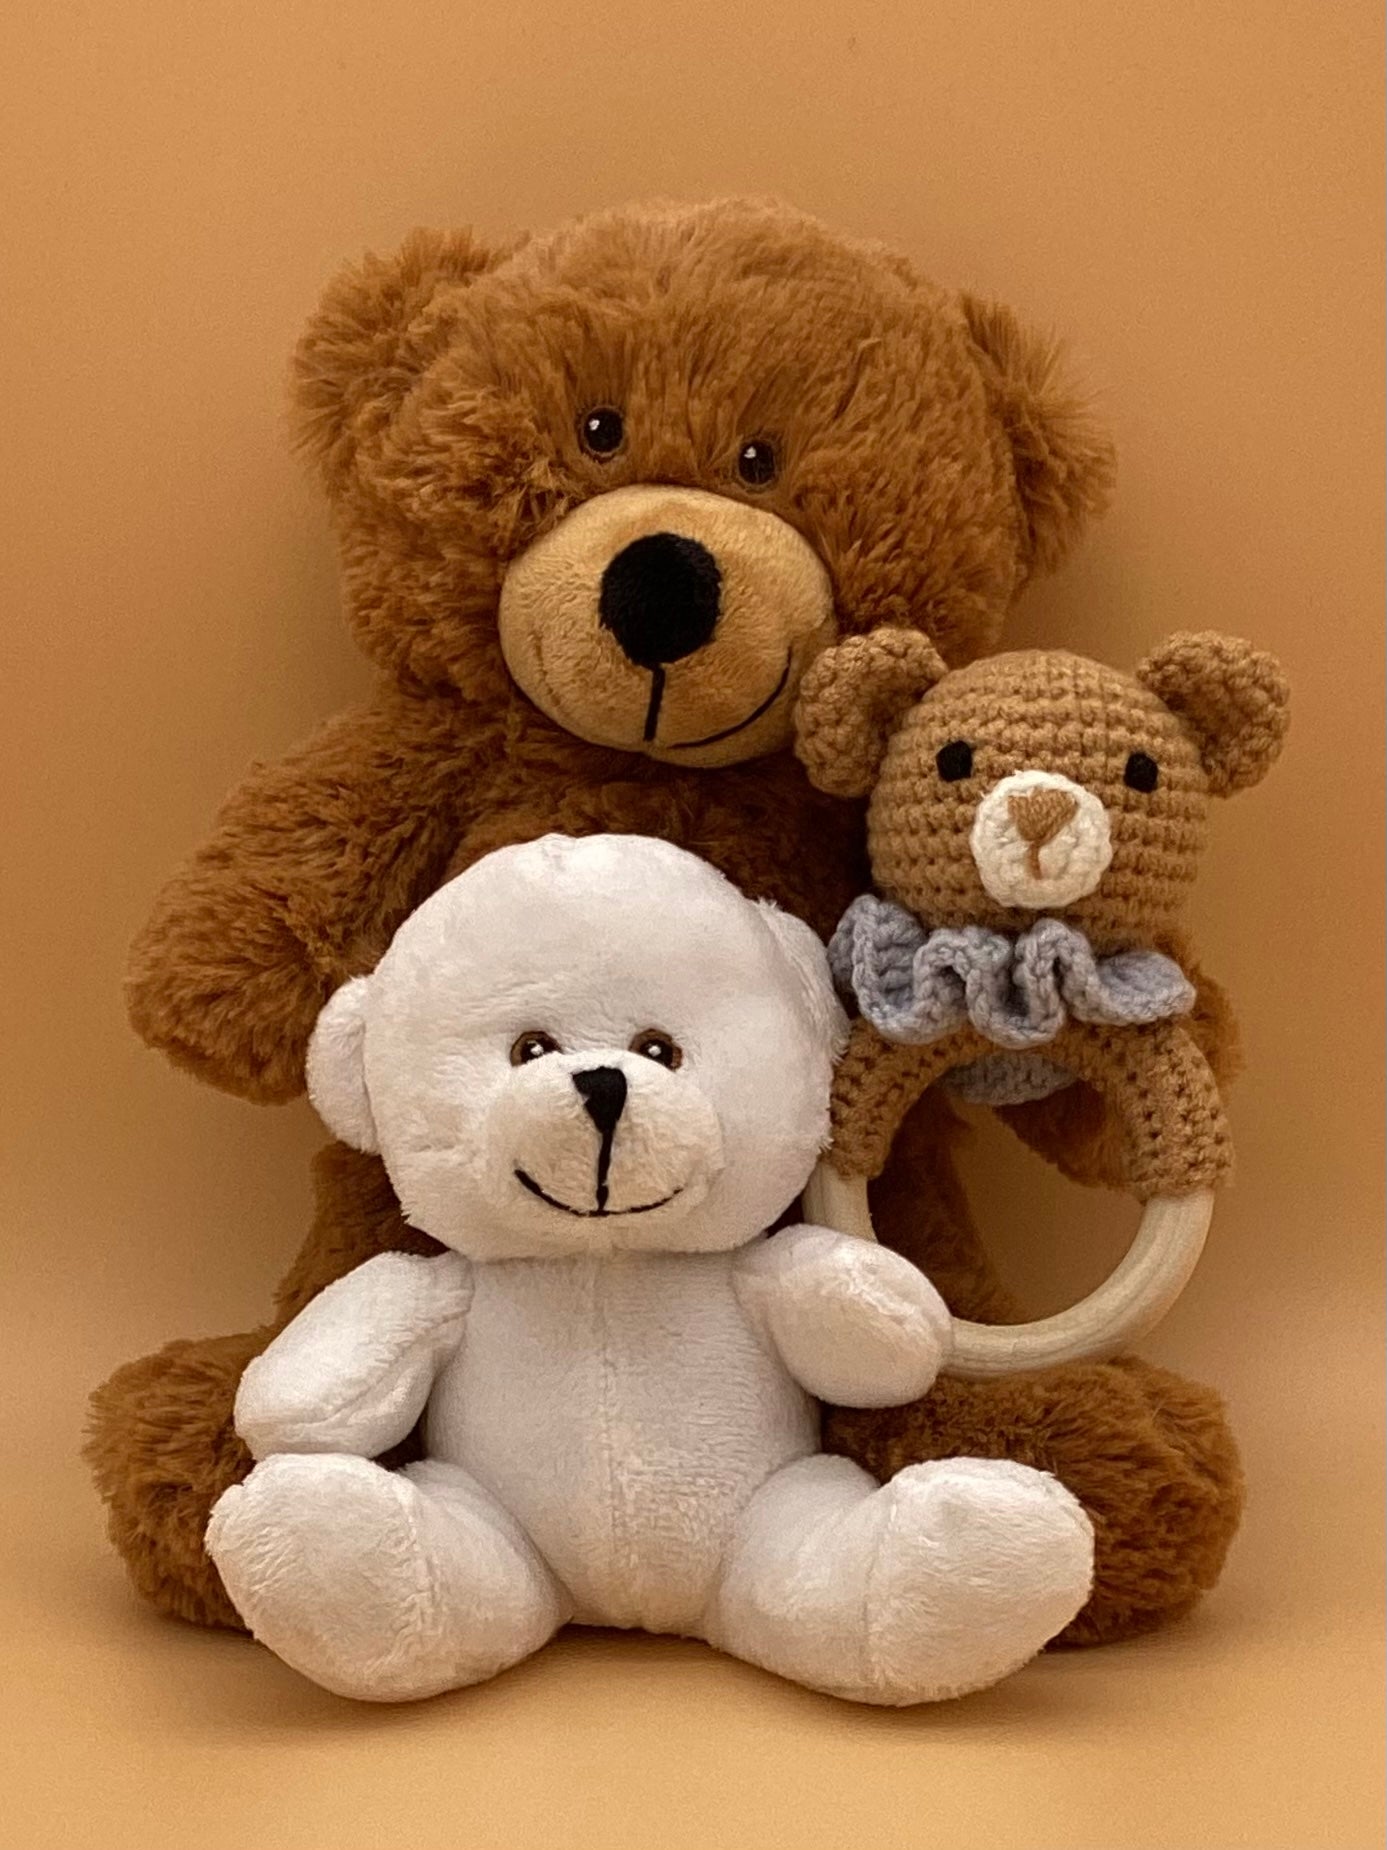 Teddy Bear Delivery: Send Teddy Bear Gifts | FTD